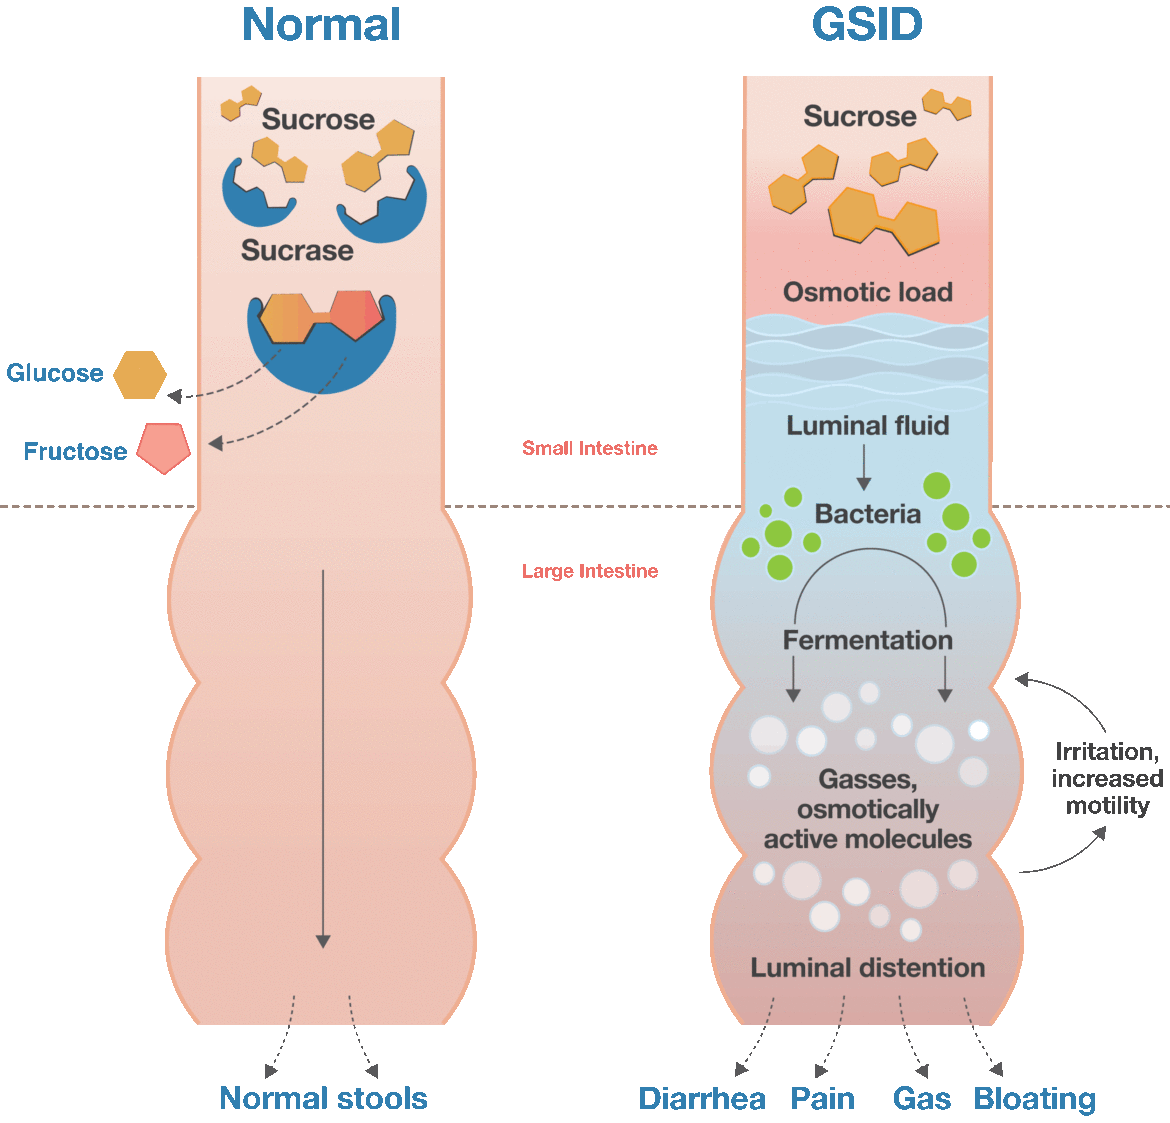 GSID_NORMAL-digestion.gif